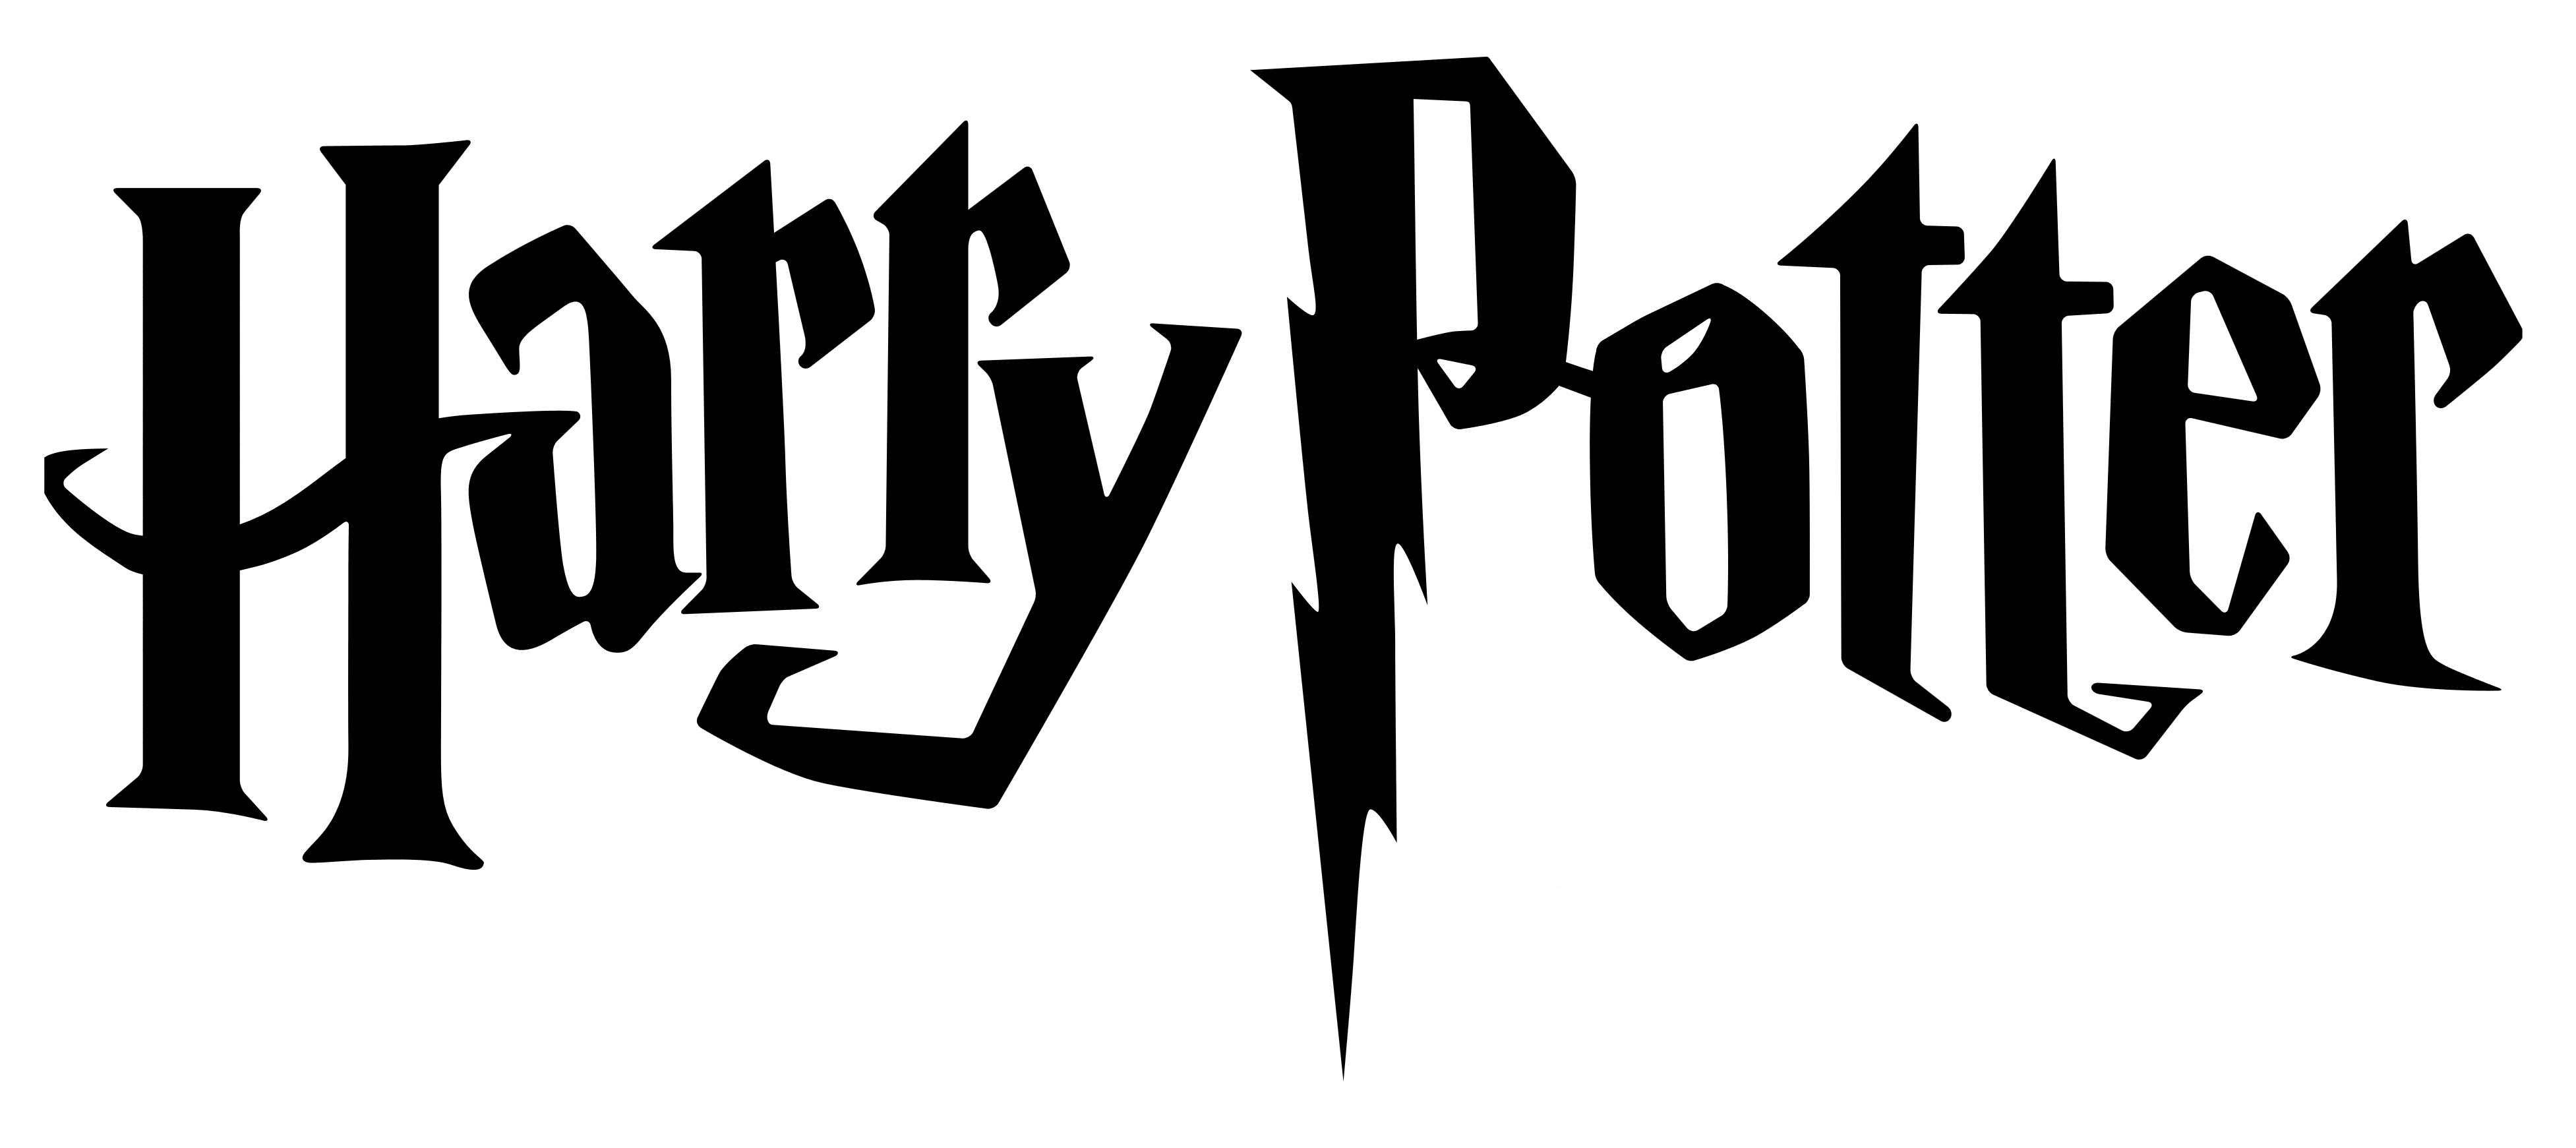 Always Harry Potter Logo - Harry Potter Doe Always Patronus Men's Black T Shirt Clothing